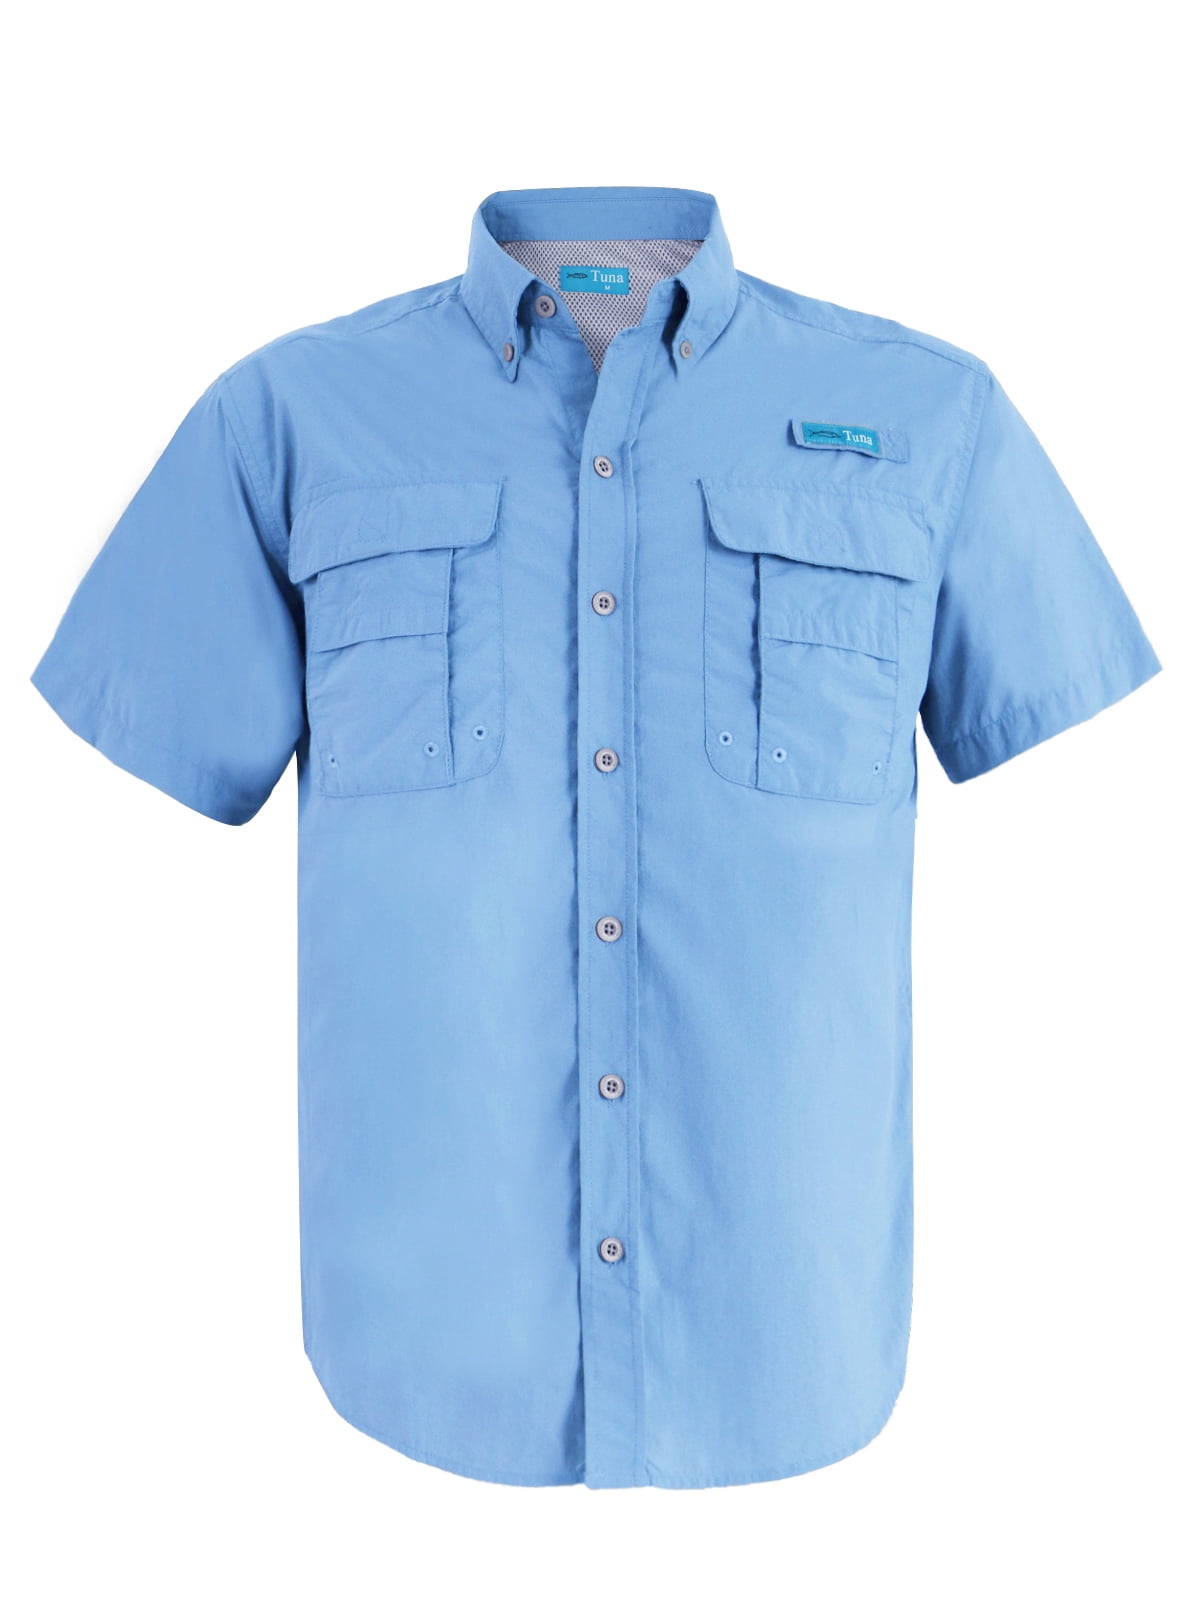 Men's Long Sleeve Sun Protection Fishing Shirt with Zipper Pockets UPF 50+  Lightweight Cool Sun Shirts for Men Hiking Outdoor(Gulf Stream,XXL)